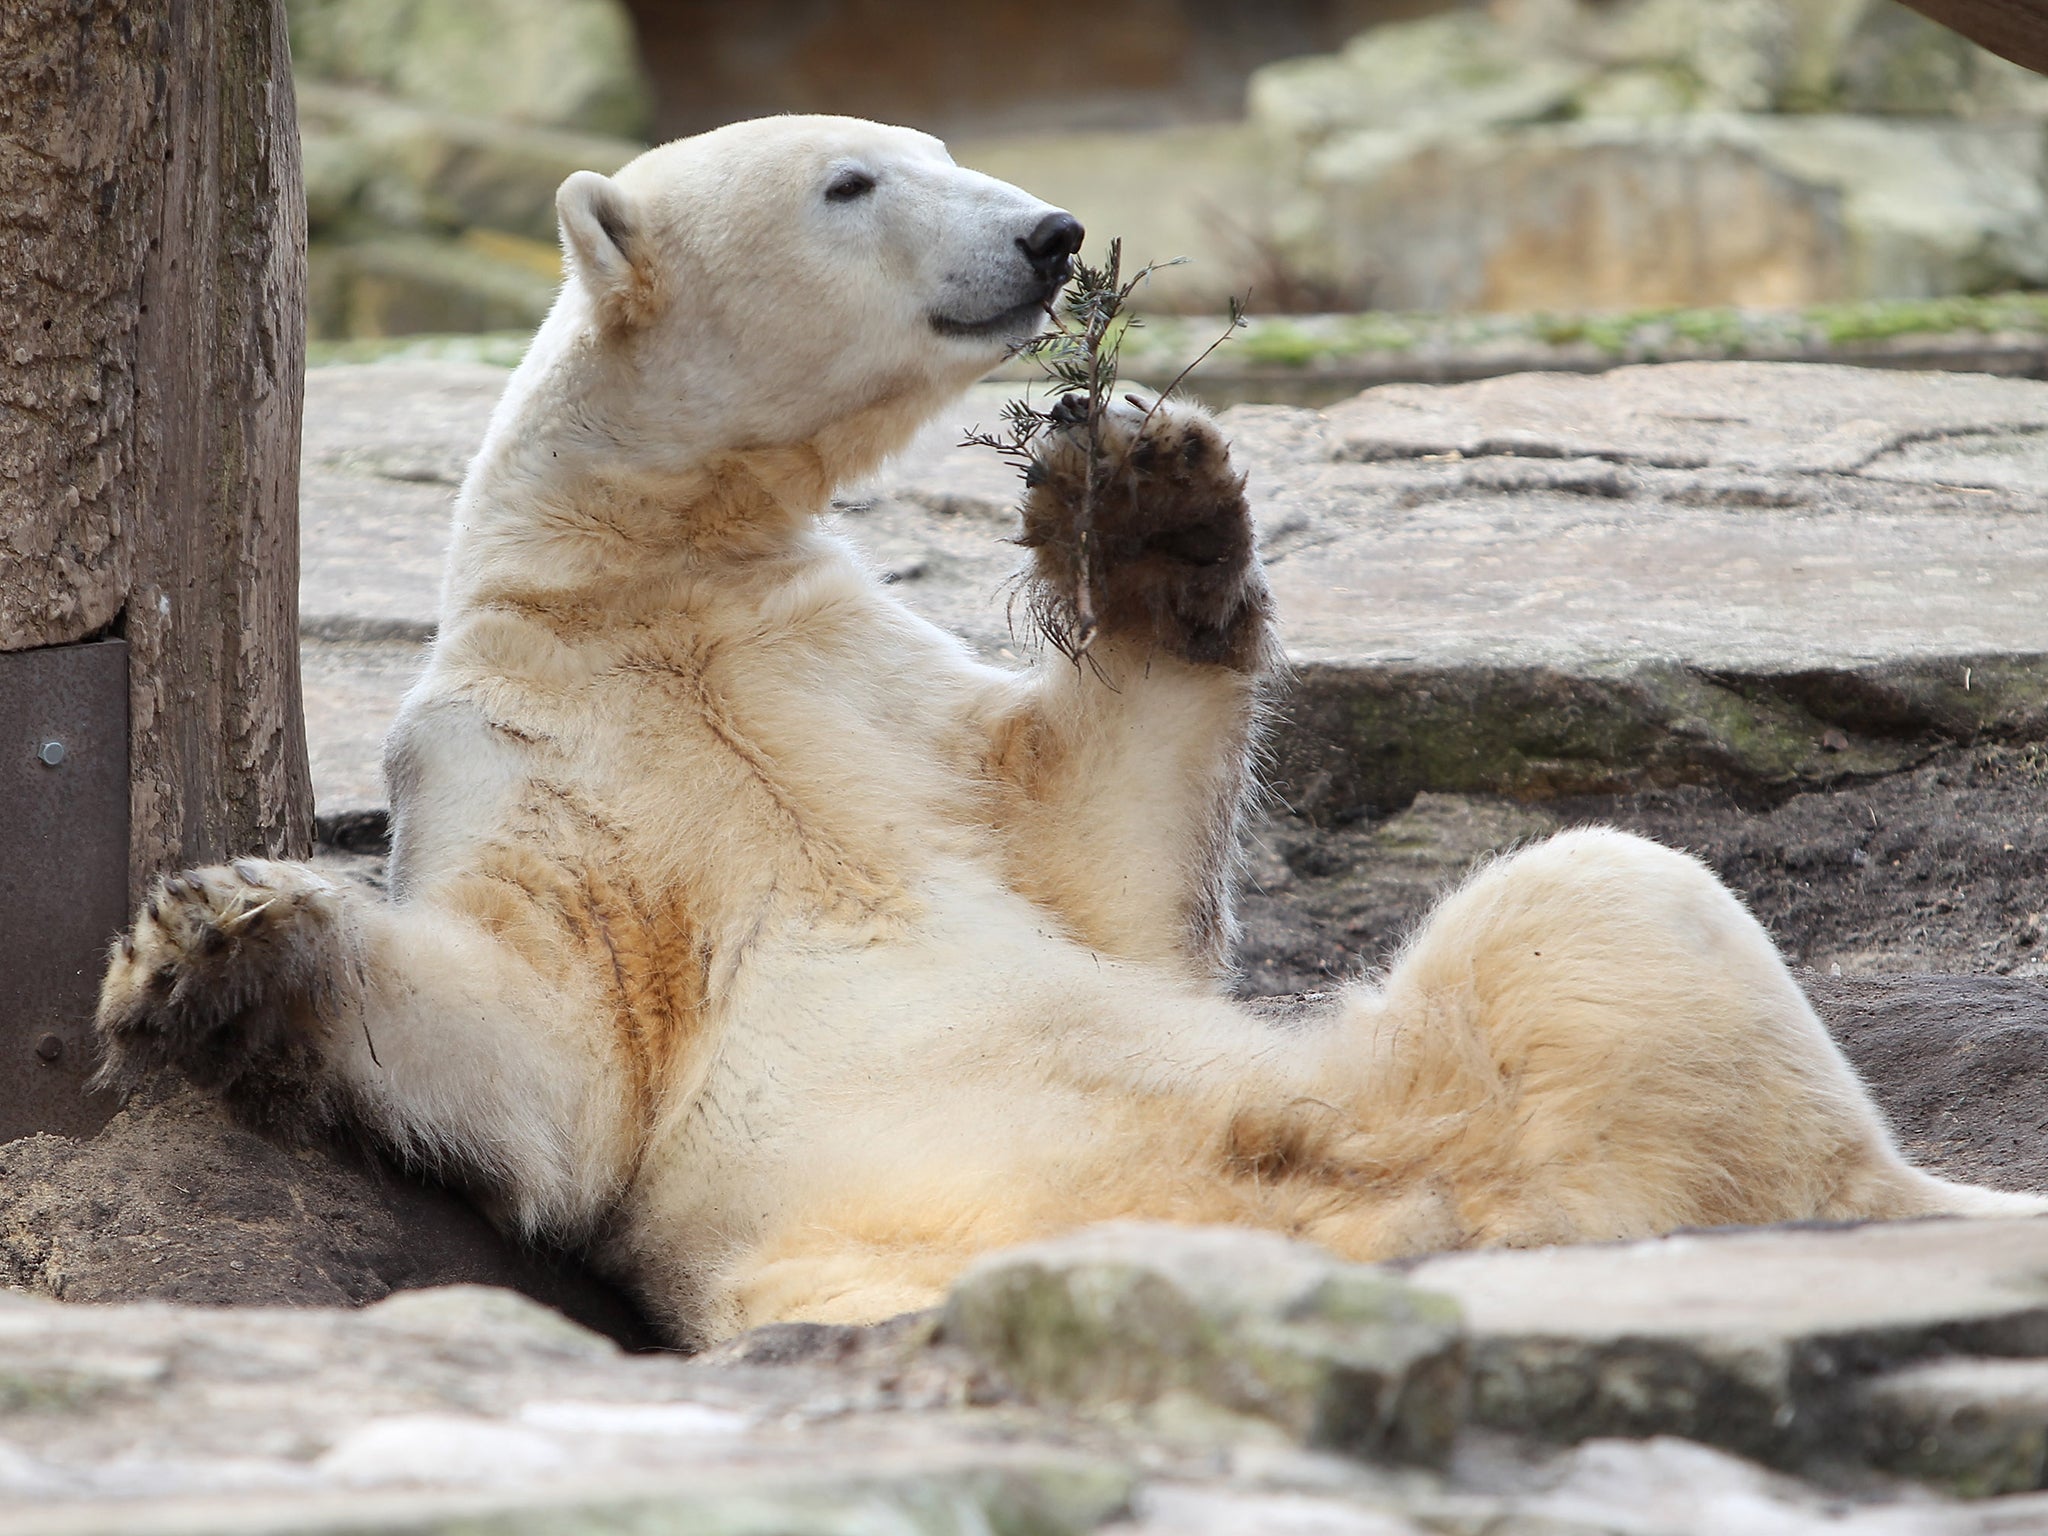 Mystery of celebrity polar bear Knut's death finally solved | The